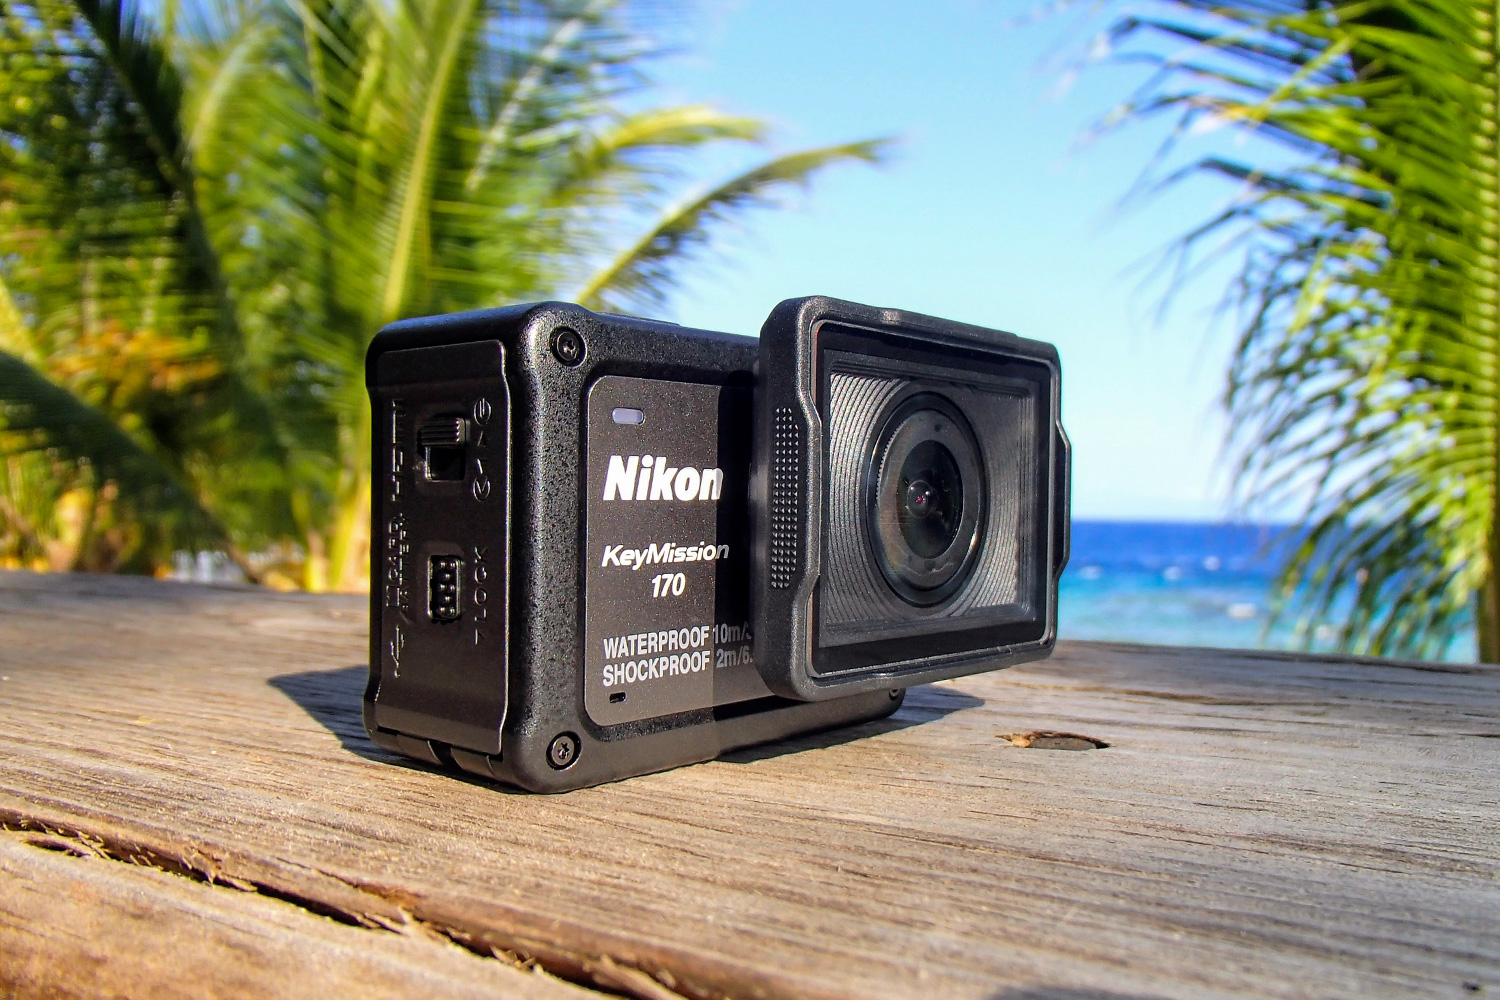 Nikon KeyMission 170 Camera Review | Digital Trends